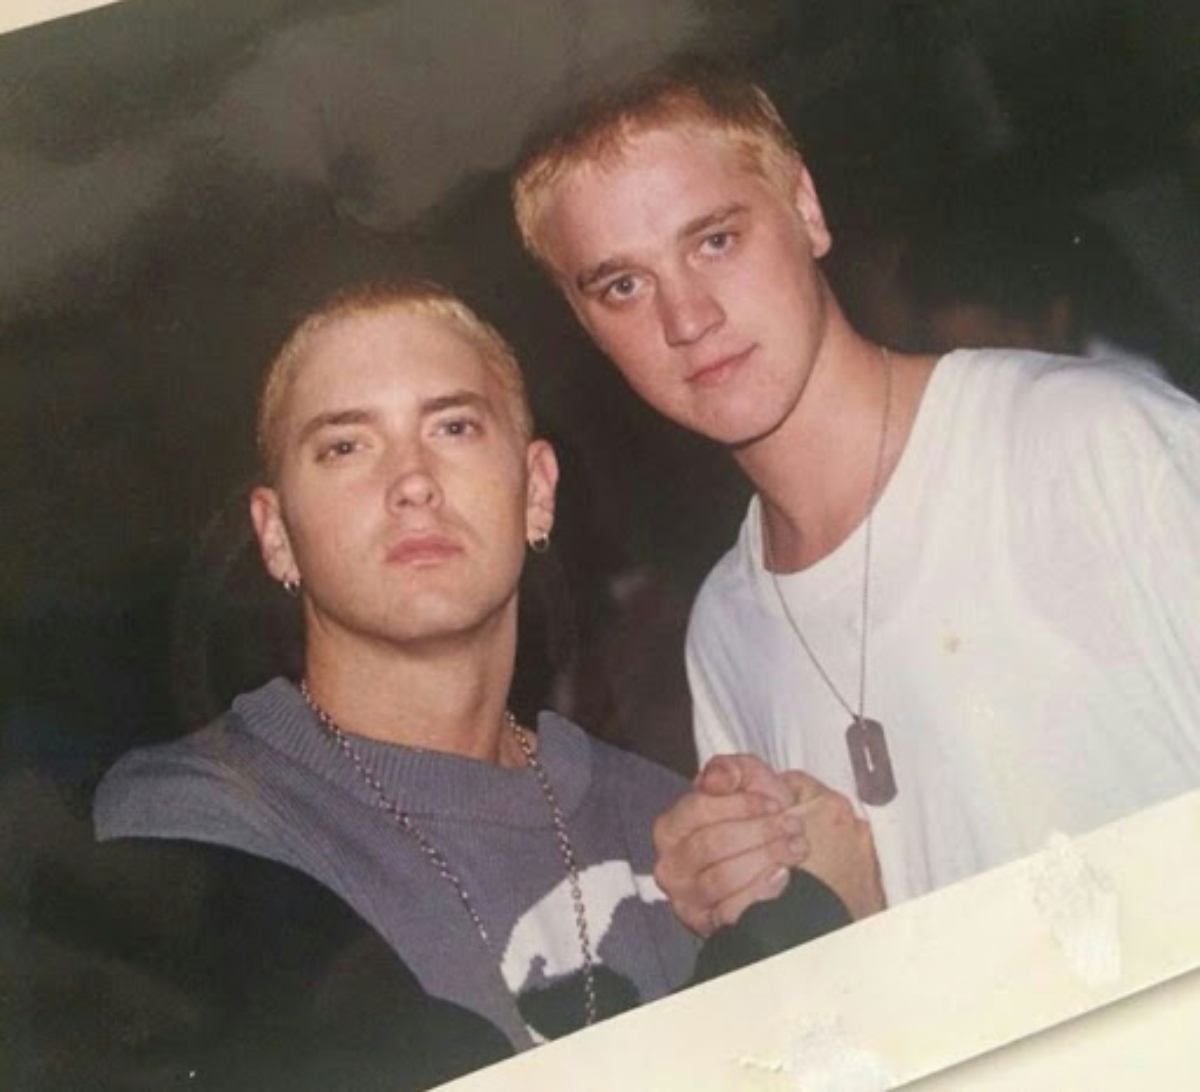 Eminem and Devon Sawa